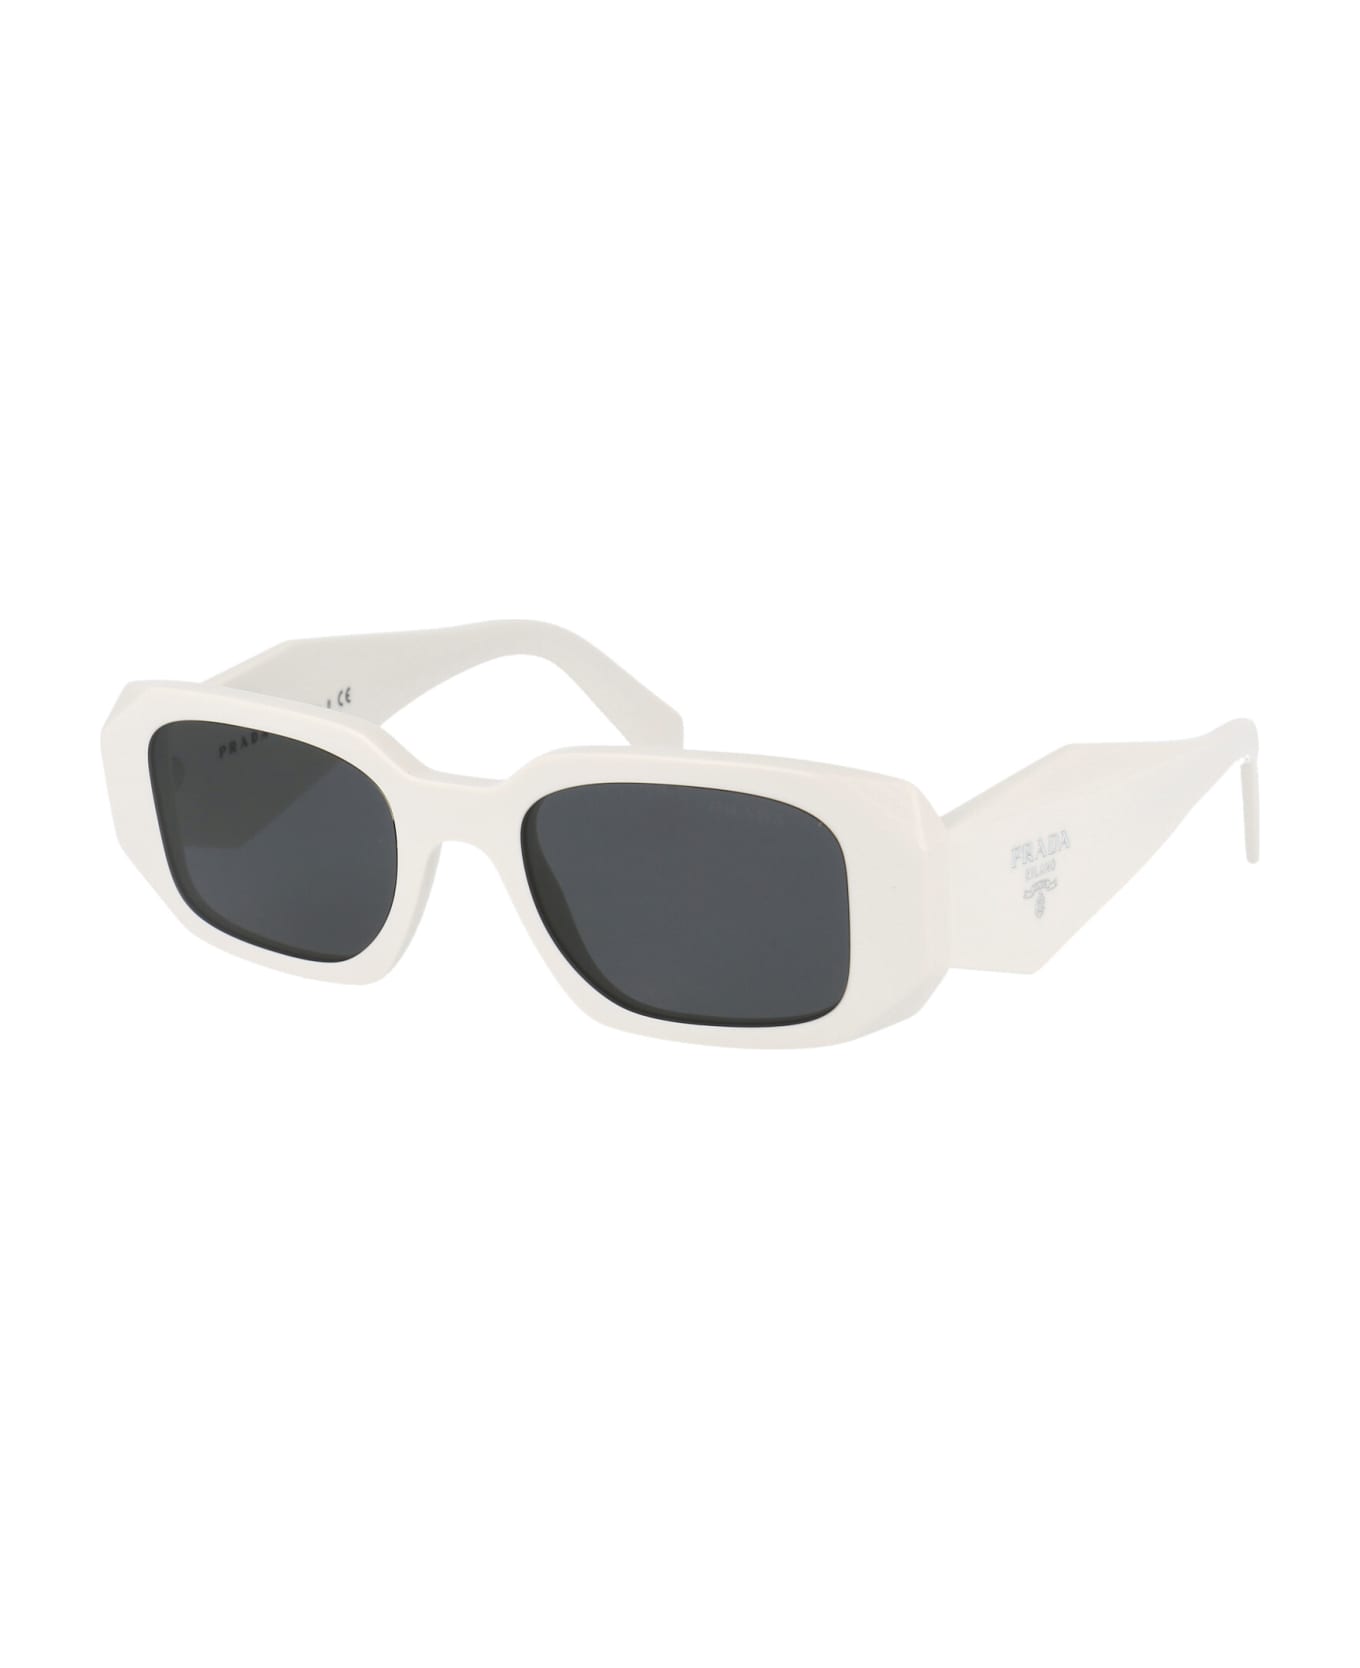 Prada Eyewear 0pr 17ws Sunglasses - 1425S0 TALC